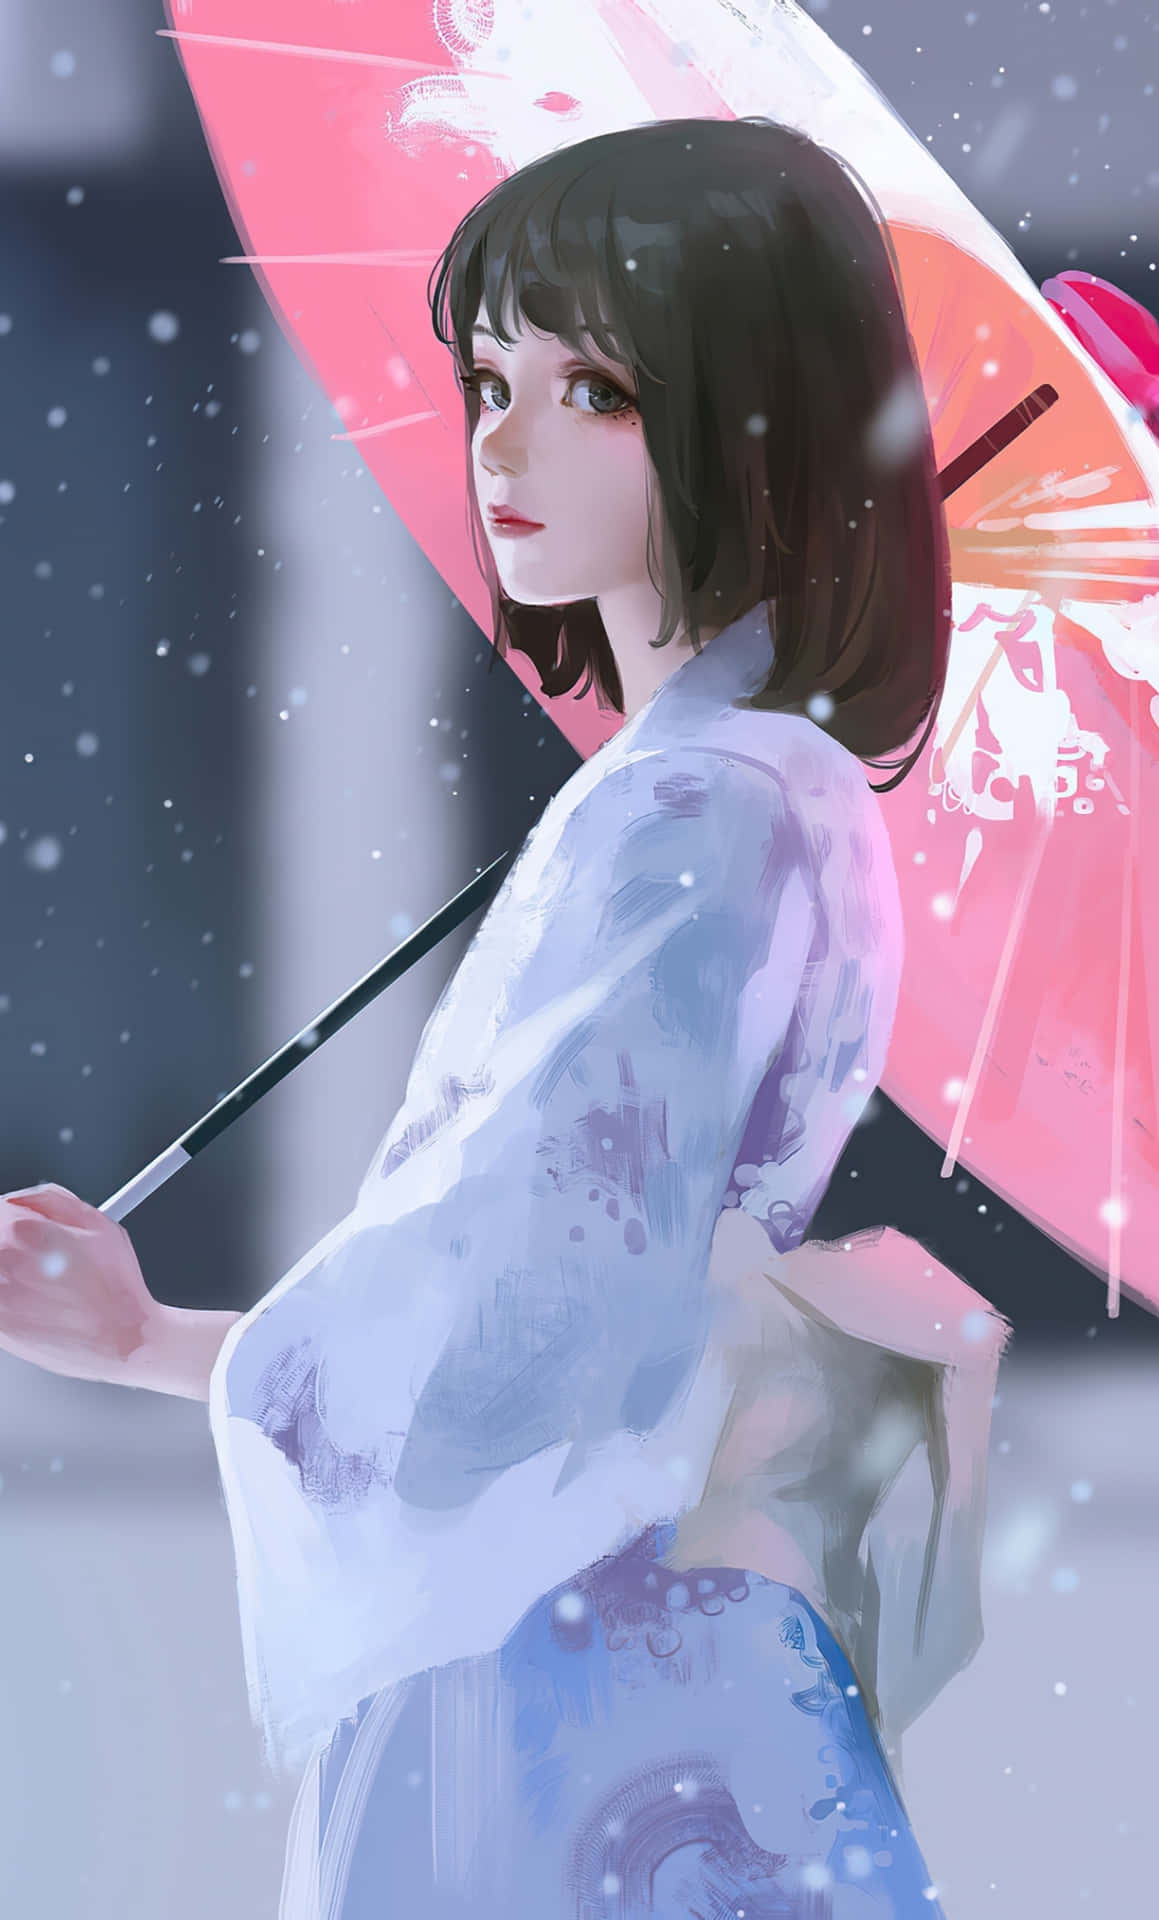 Bildeines Anime-teenager-mädchens Im Kimono